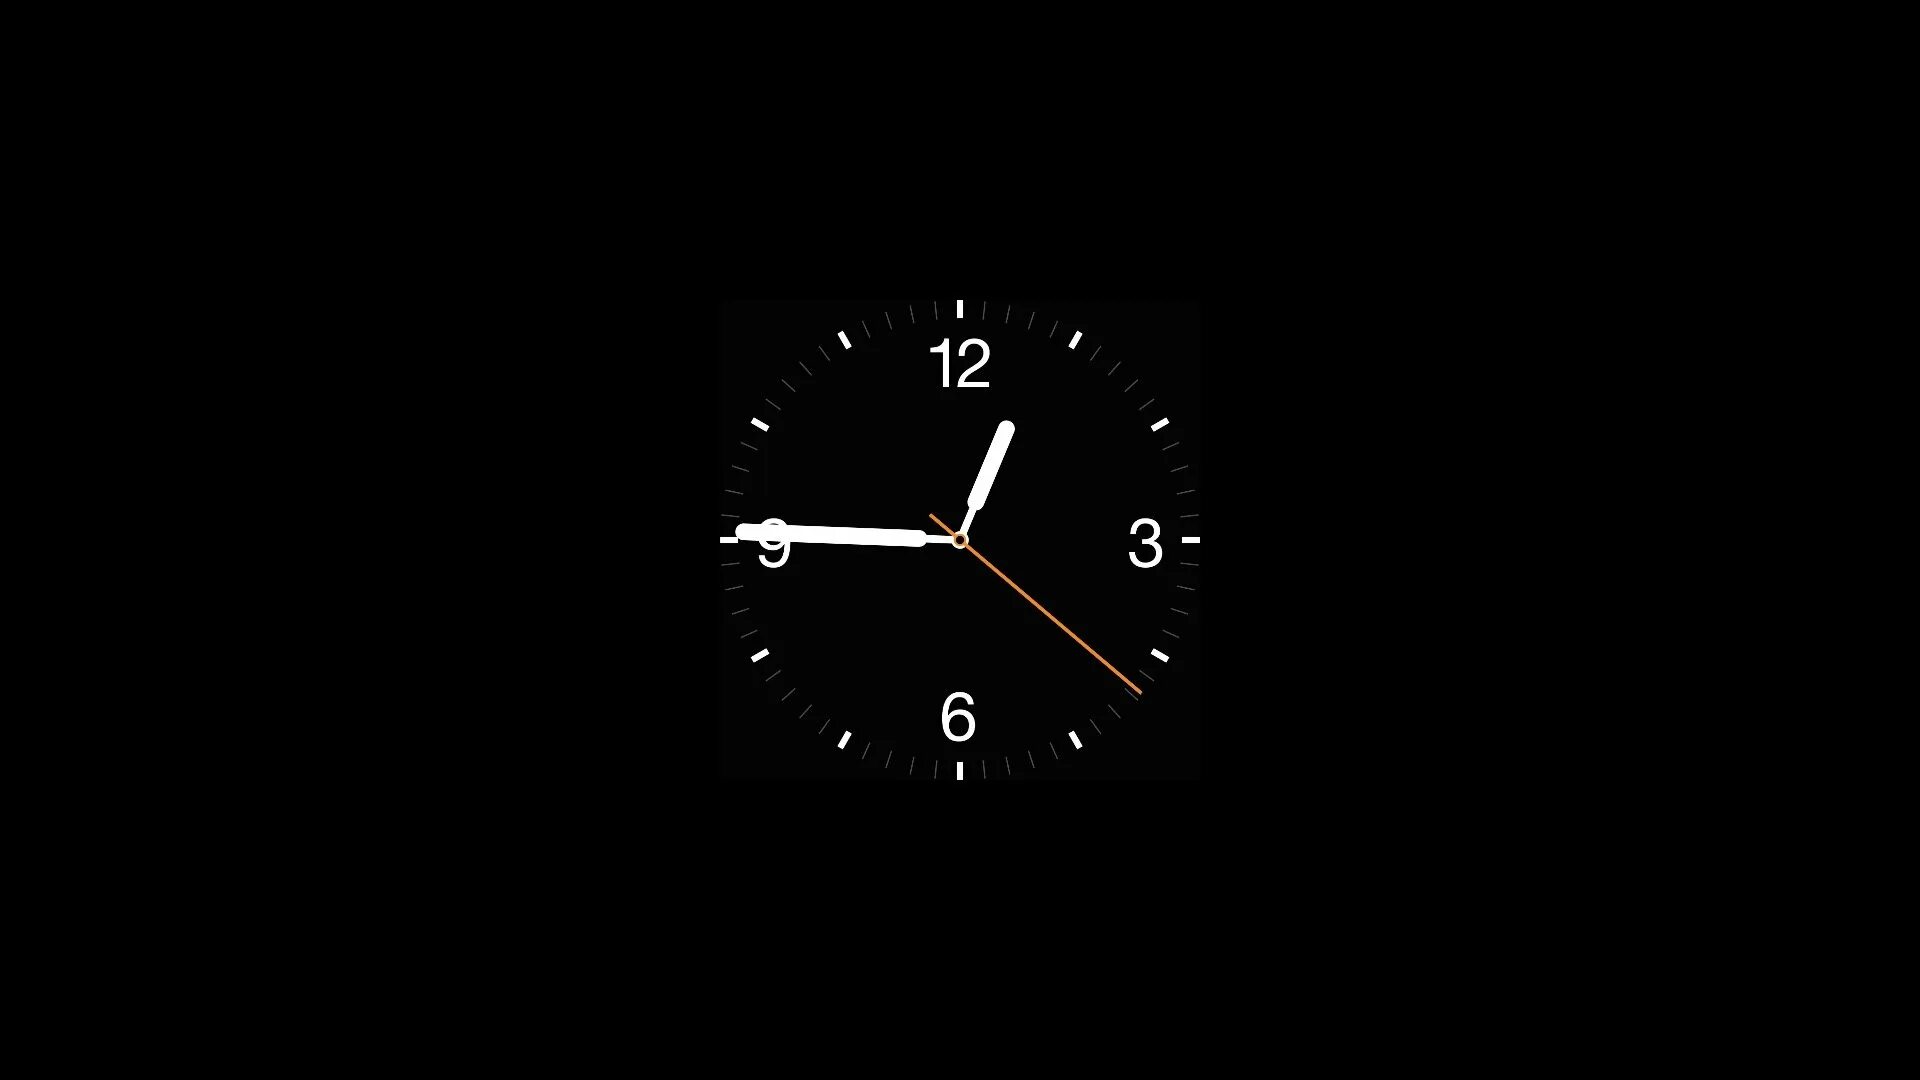 Заставки на экран смарт. Часы на черном фоне. Заставка на часы. Стильные часы на заставку. Обои на рабочий стол часы.